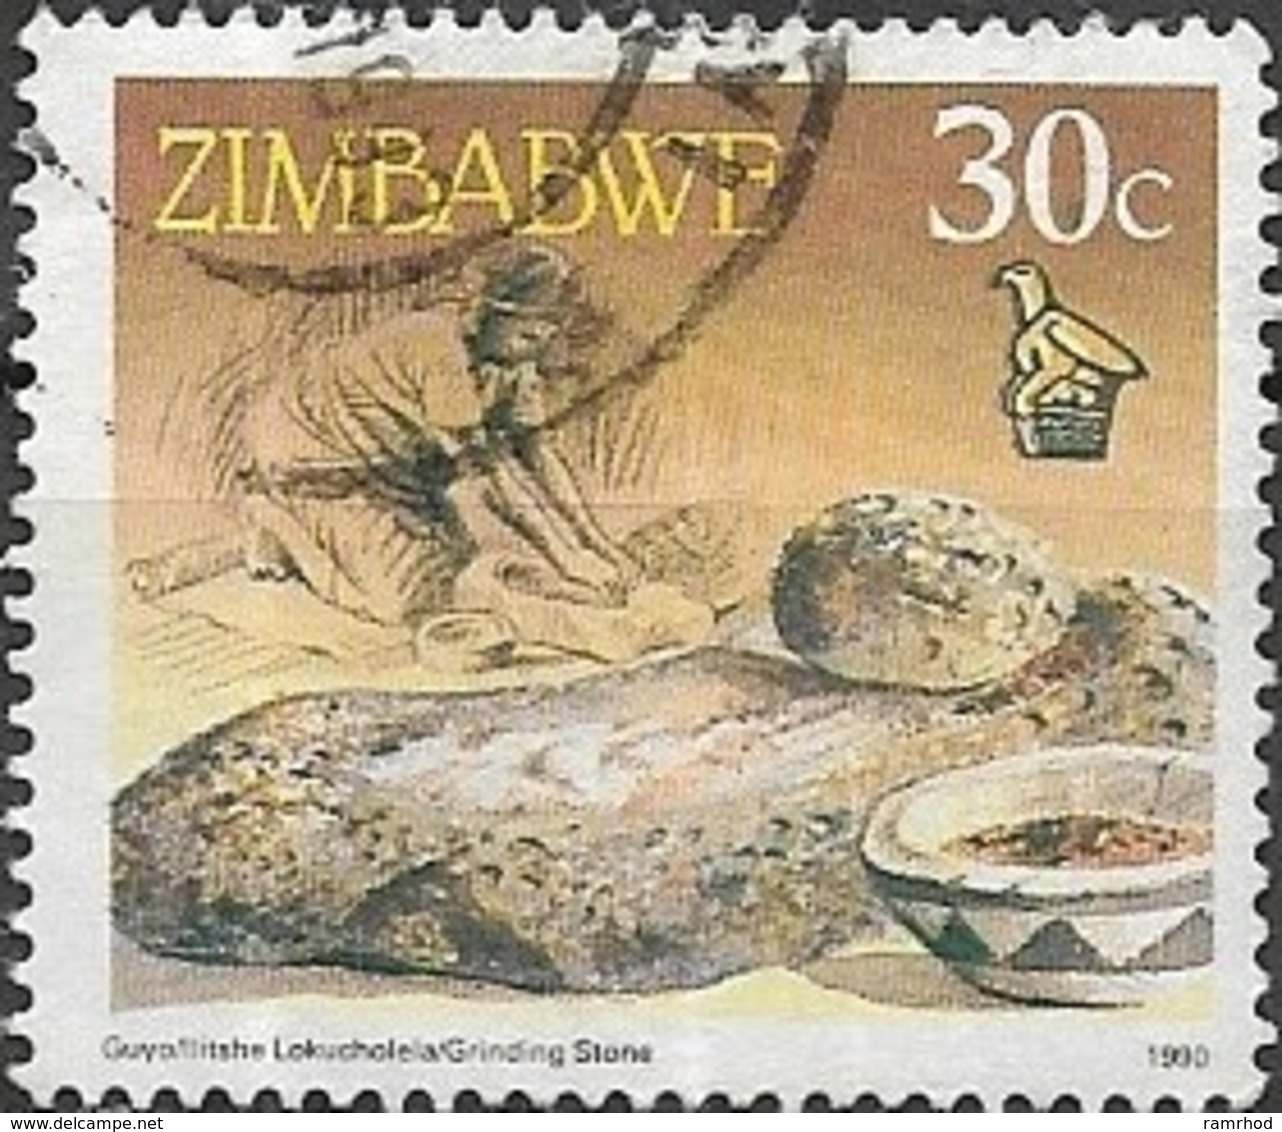 ZIMBABWE 1990 Cultural Artifacts - 30c. - Grinding Stone  FU - Zimbabwe (1980-...)